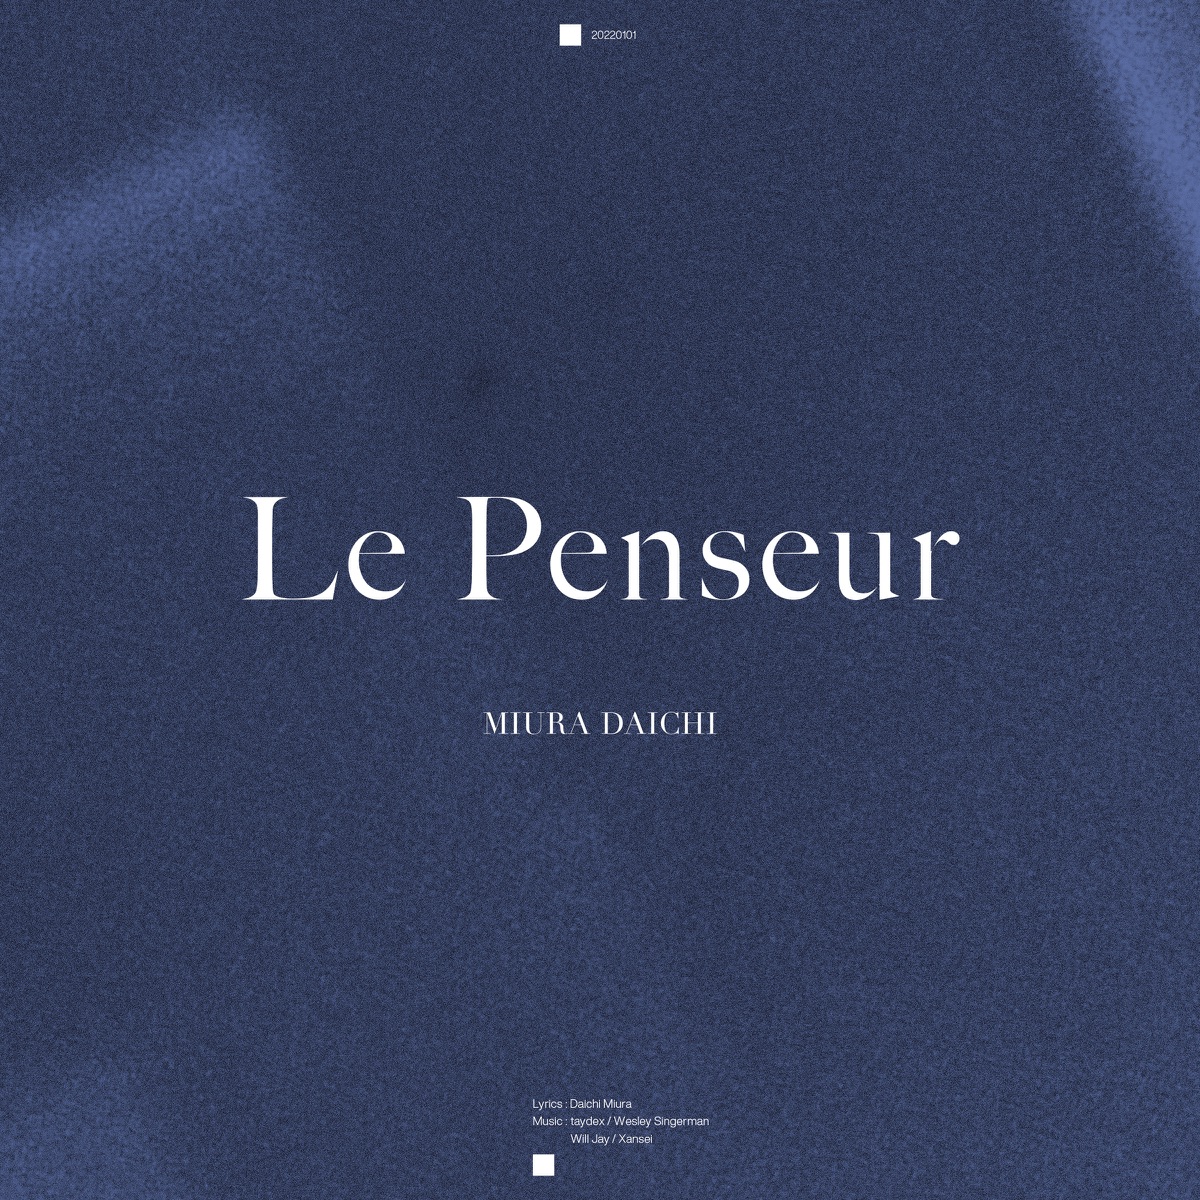 Cover art for『Daichi Miura - Le Penseur』from the release『Le Penseur